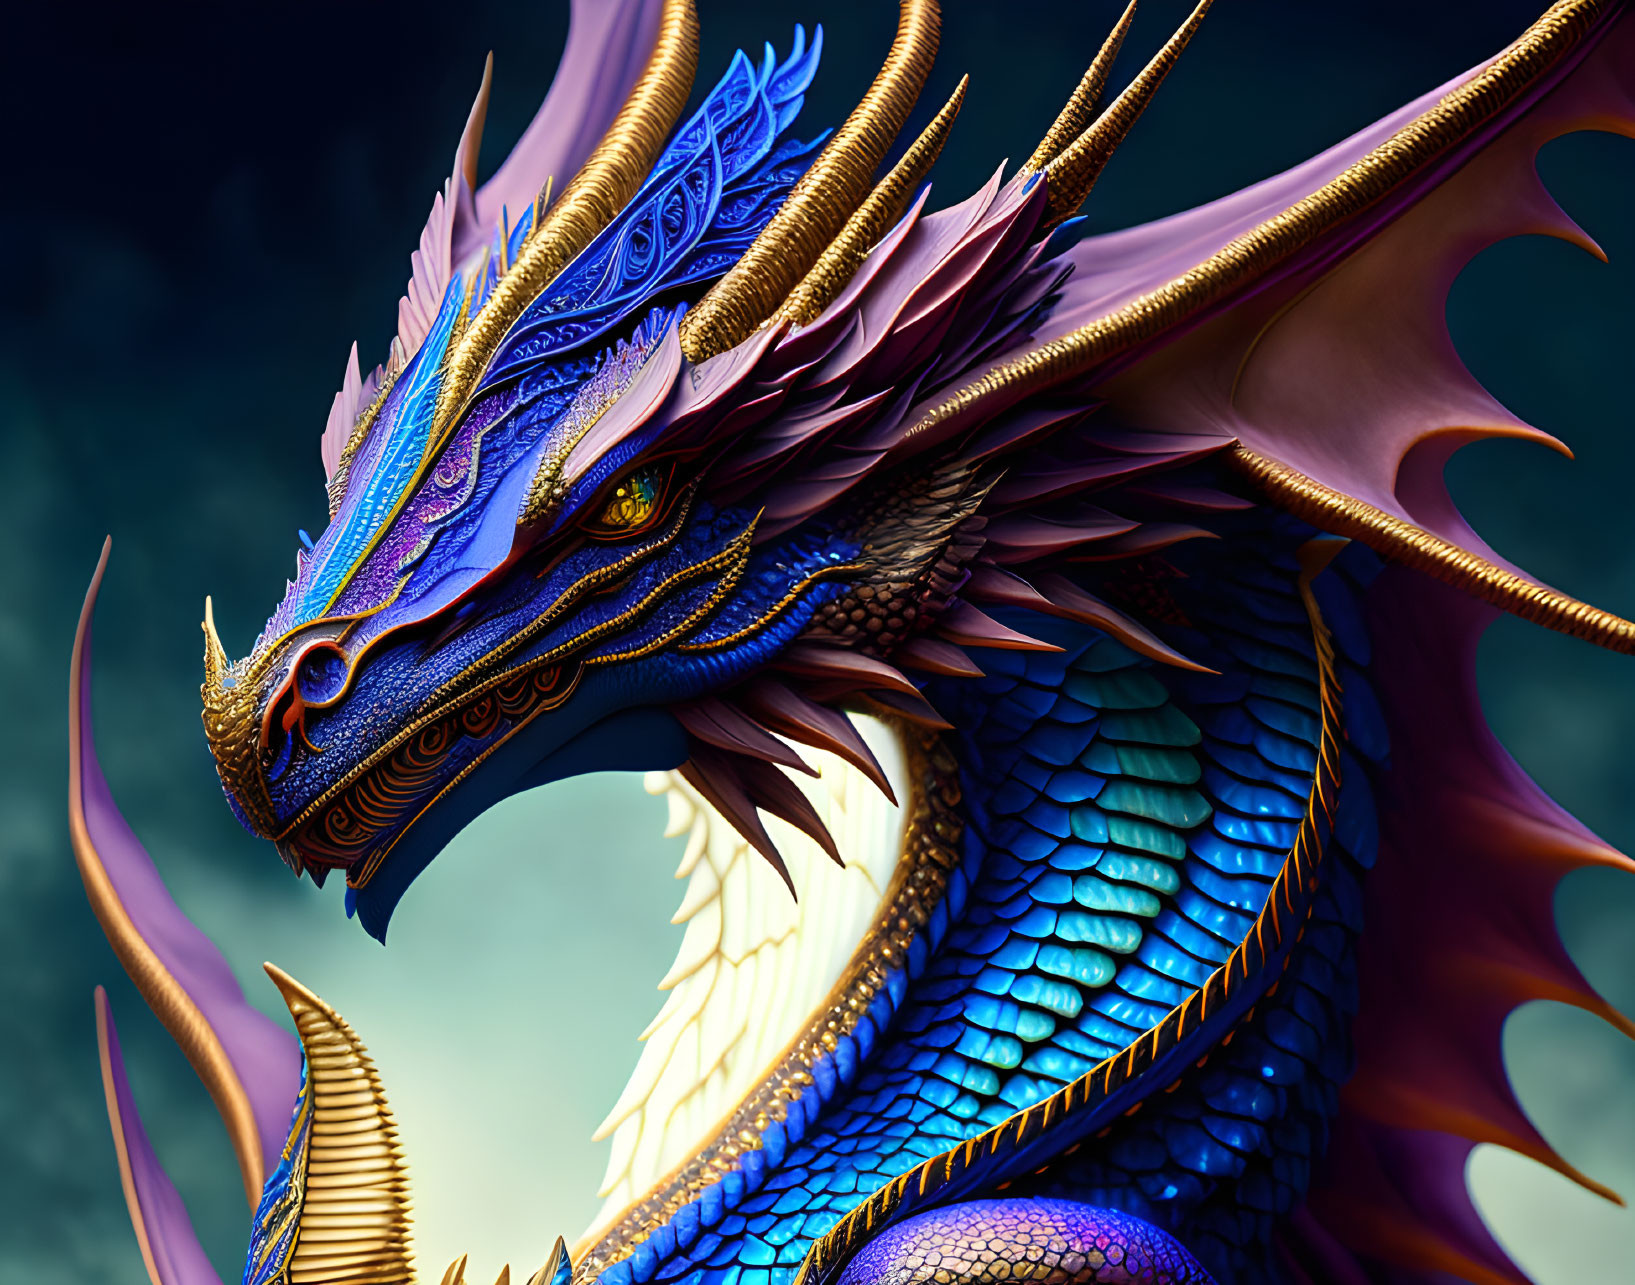 Royal Dragon